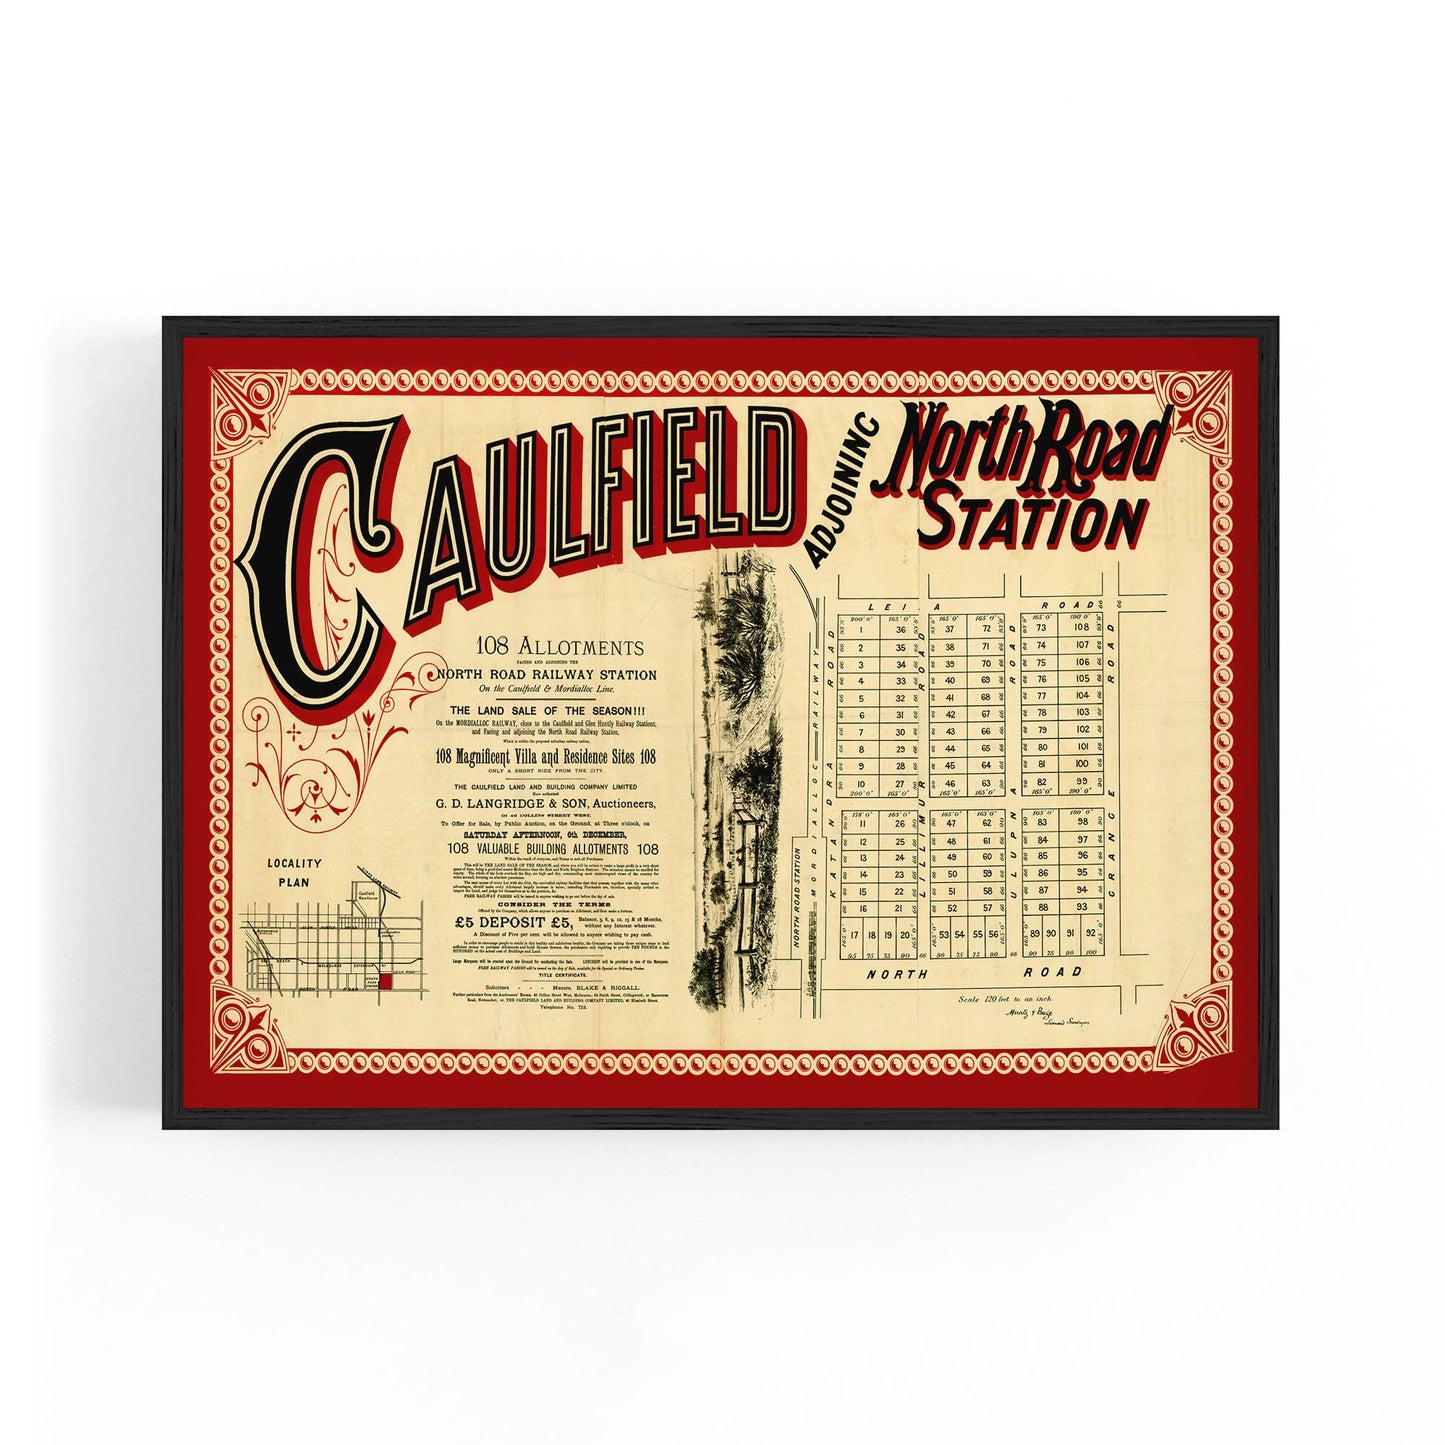 Caulfield Melbourne Vintage Real Estate Advert Art #2 - The Affordable Art Company